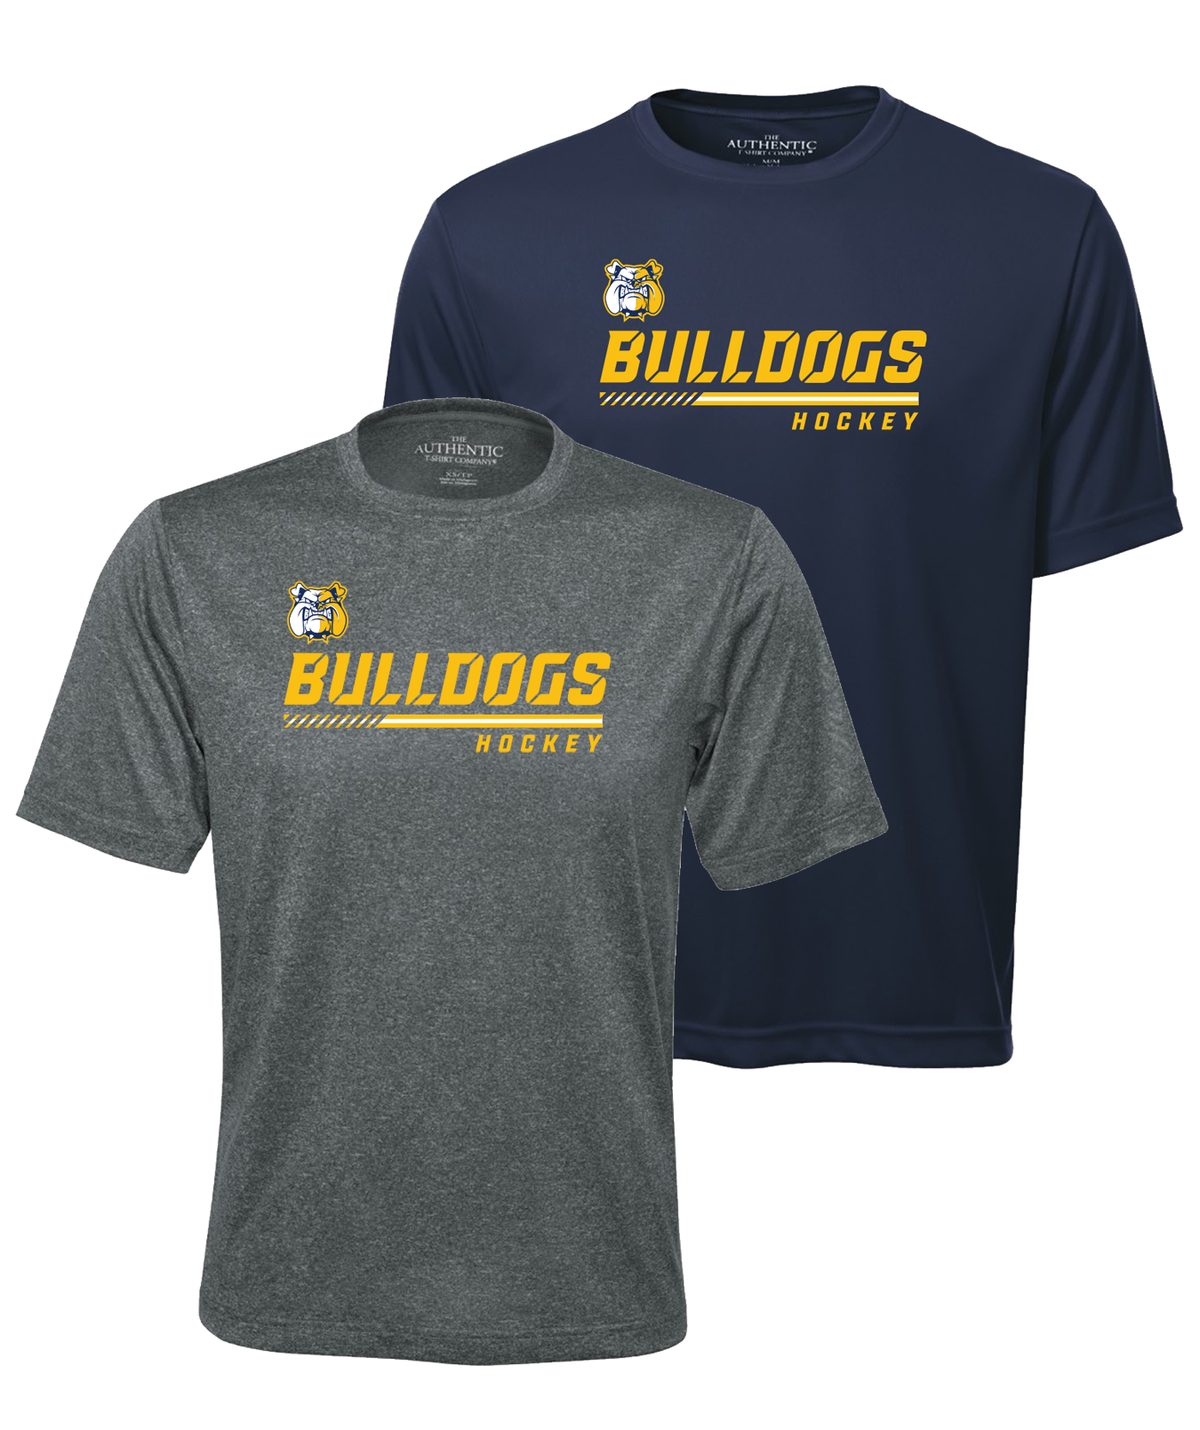 Bulldogs "Hockey" T-Shirt